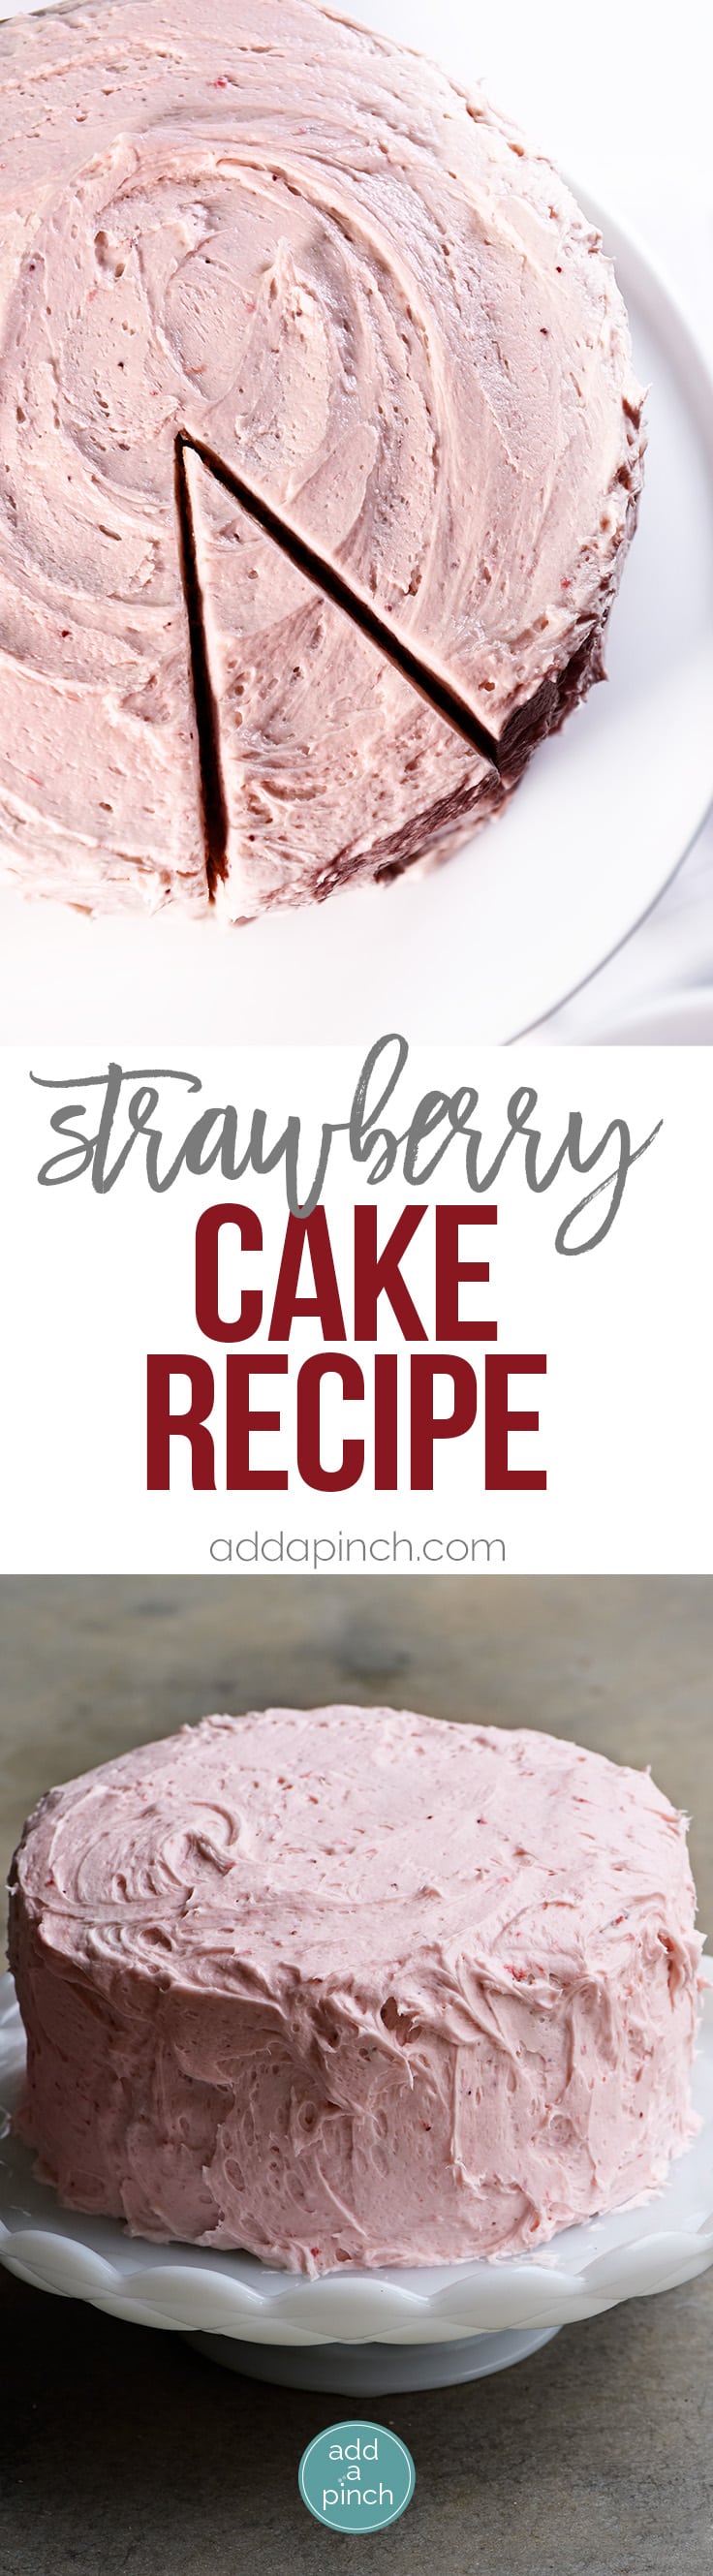 Strawberry Cake Recipe - Strawberry Cake made from scratch! This strawberry cake recipe is perfect for those looking for a homemade fresh strawberry cake. // addapinch.com